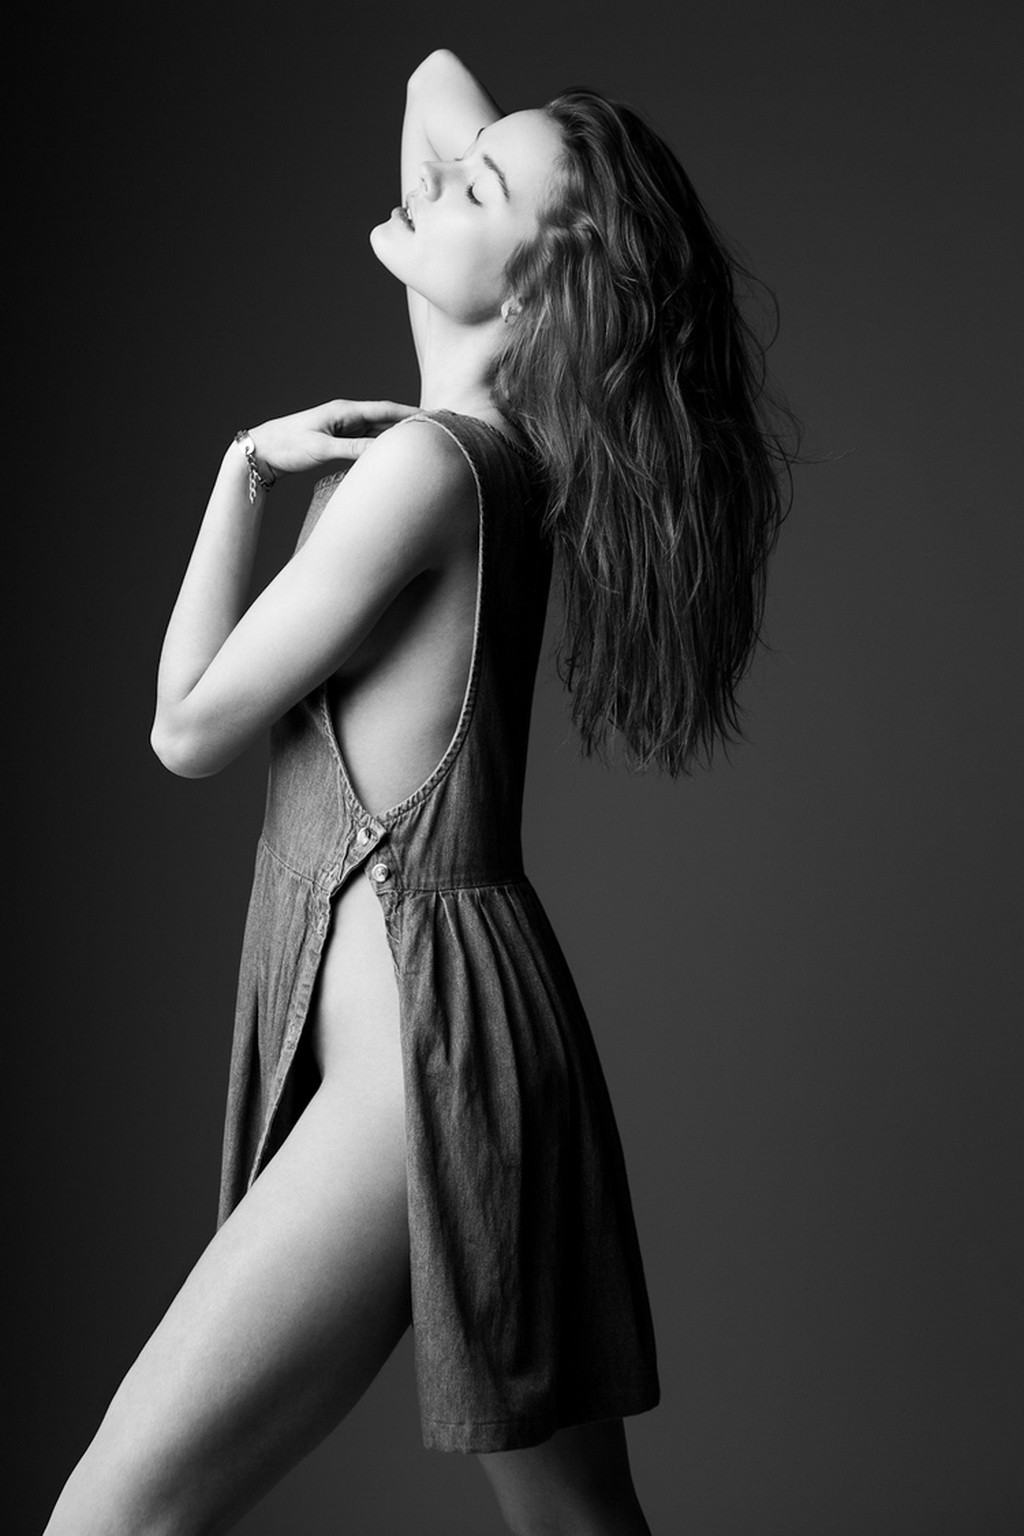 Monika jagaciak pose nue mais cache ses atouts dans le photoshoot de viva moda outtak
 #75210741